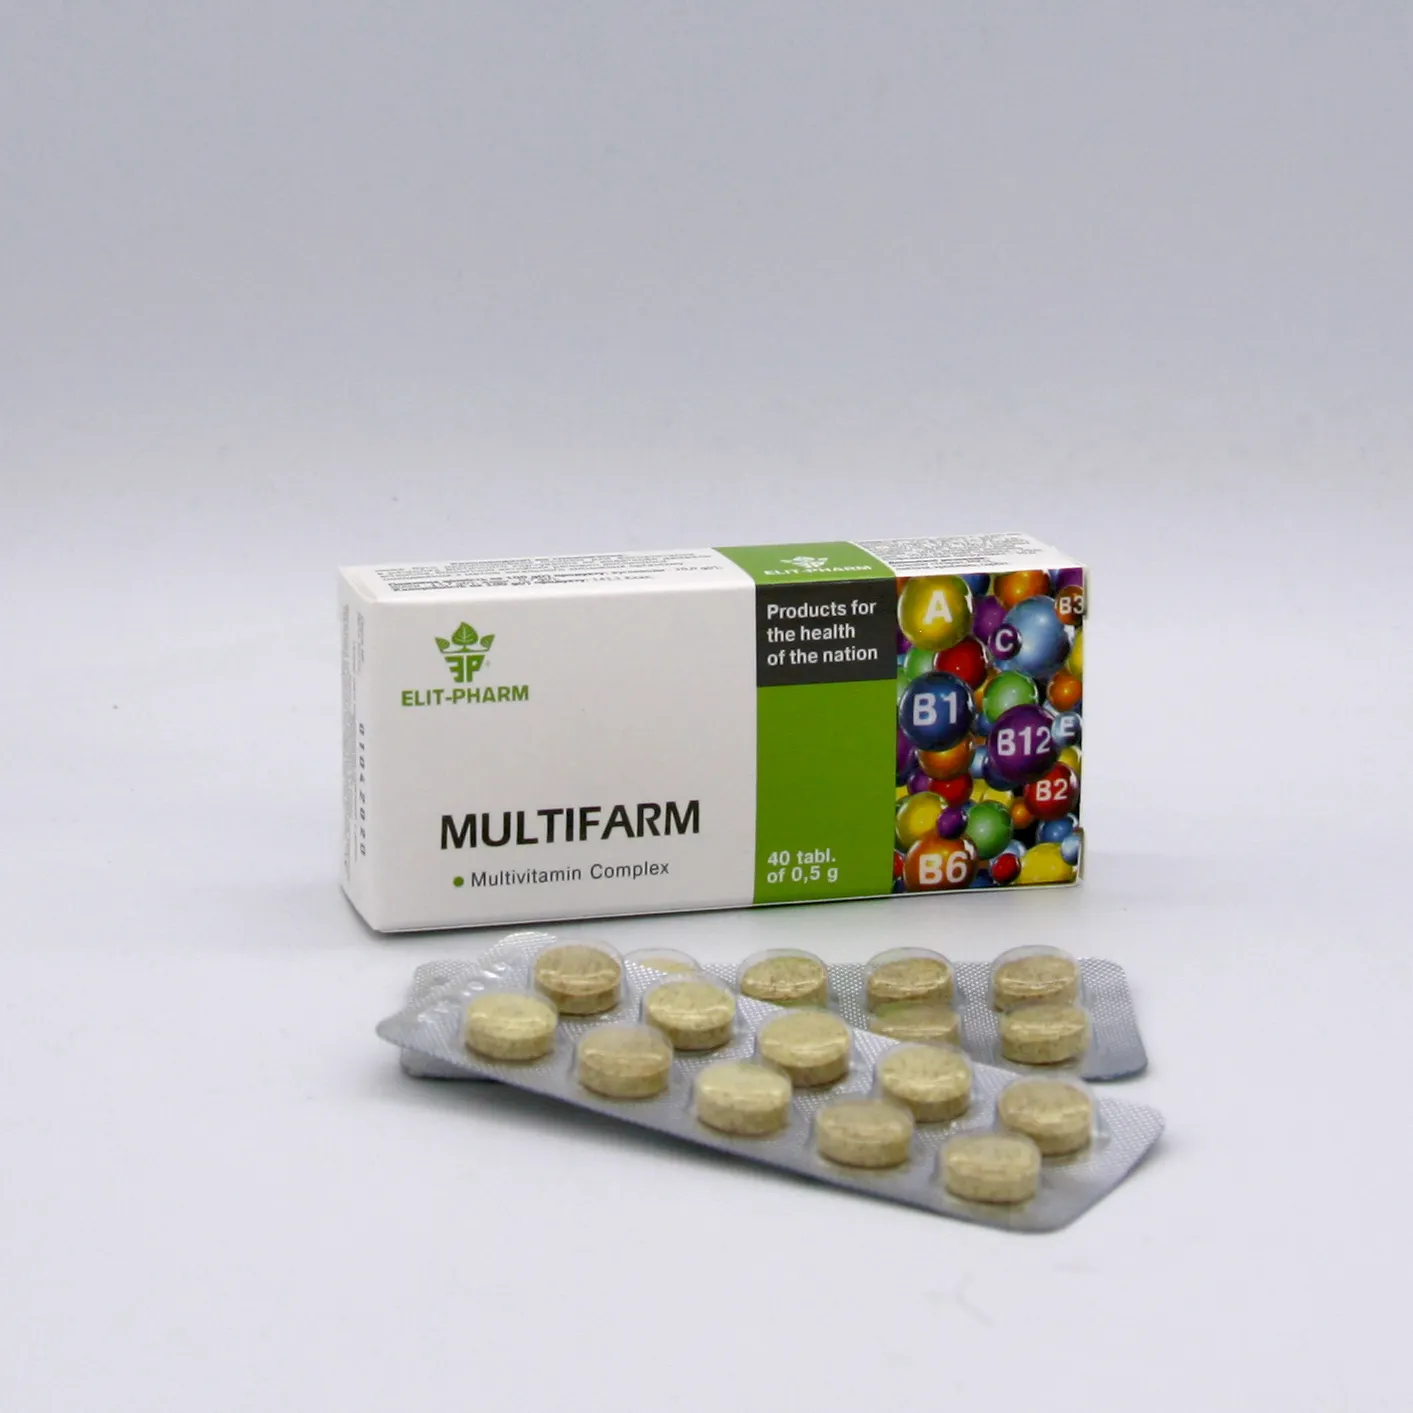 Multivitamin Tablets - Health Care Supplement Multipharm Vitamin Tablets for Vitamin Deficit Prevention